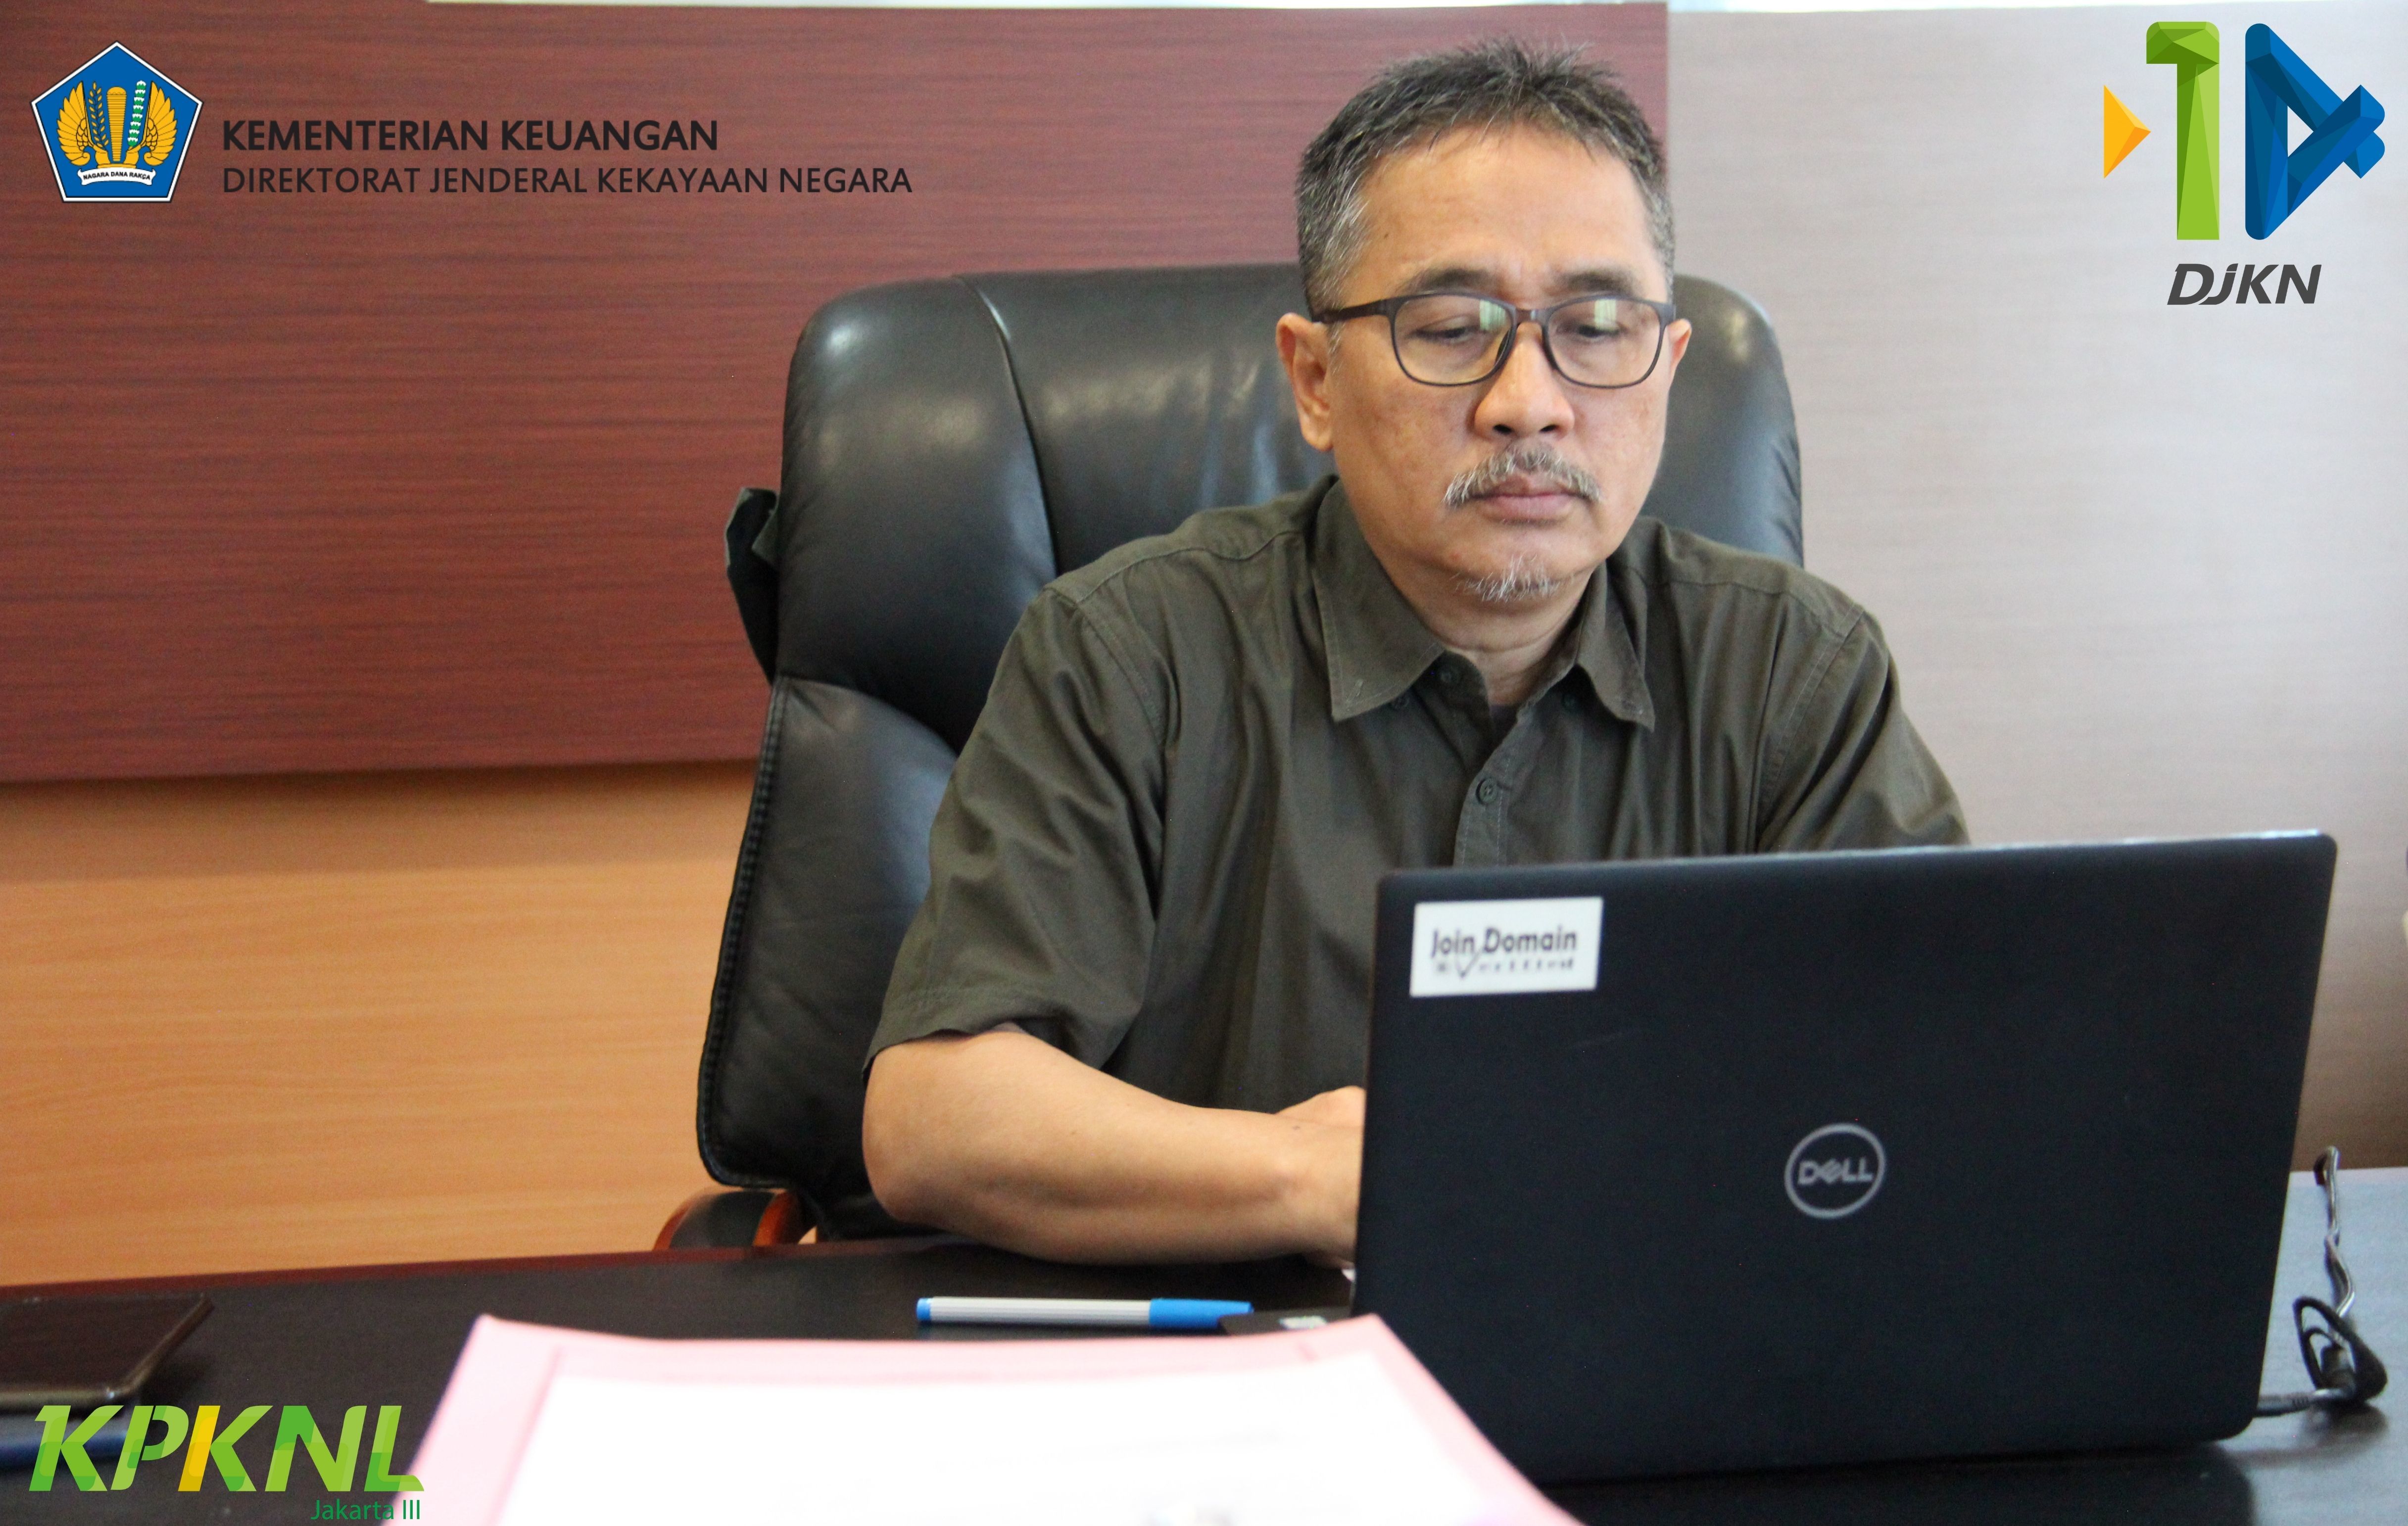 Sehari Bersama DJKN, KPKNL Jakarta III Persembahkan Gerai Layanan Virtual Kepada Pengguna Jasa